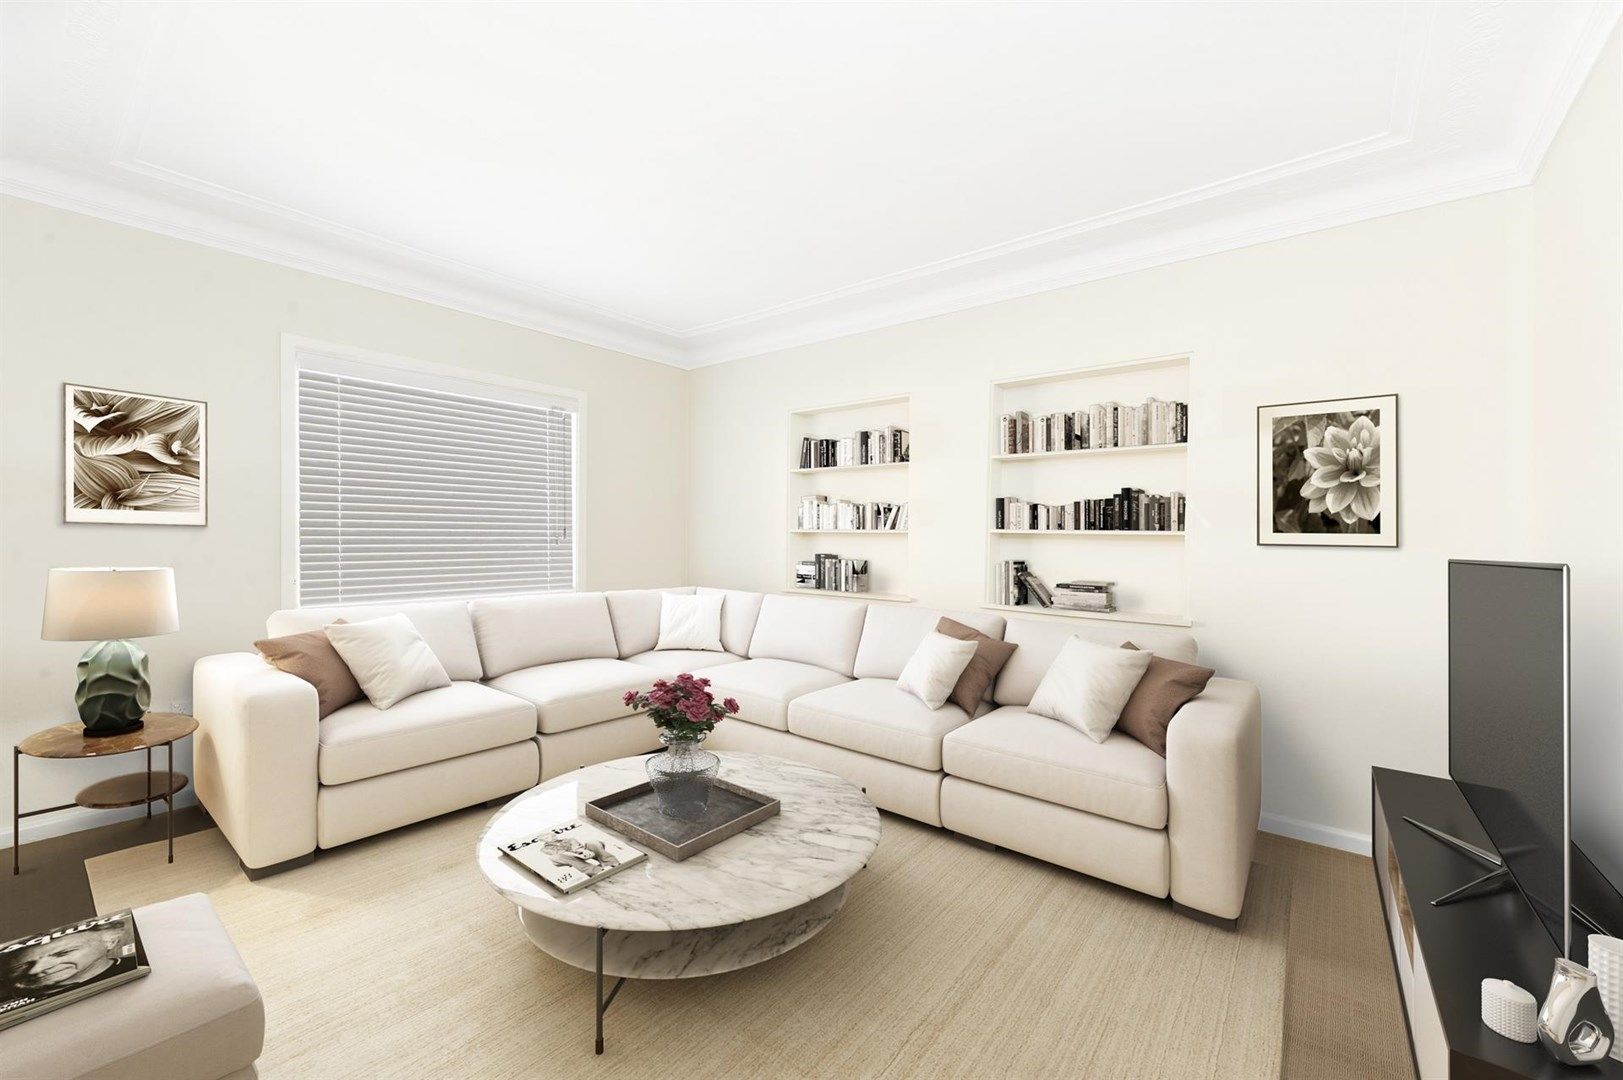 2 bedrooms Apartment / Unit / Flat in 3/23 Mckeon Street MAROUBRA NSW, 2035